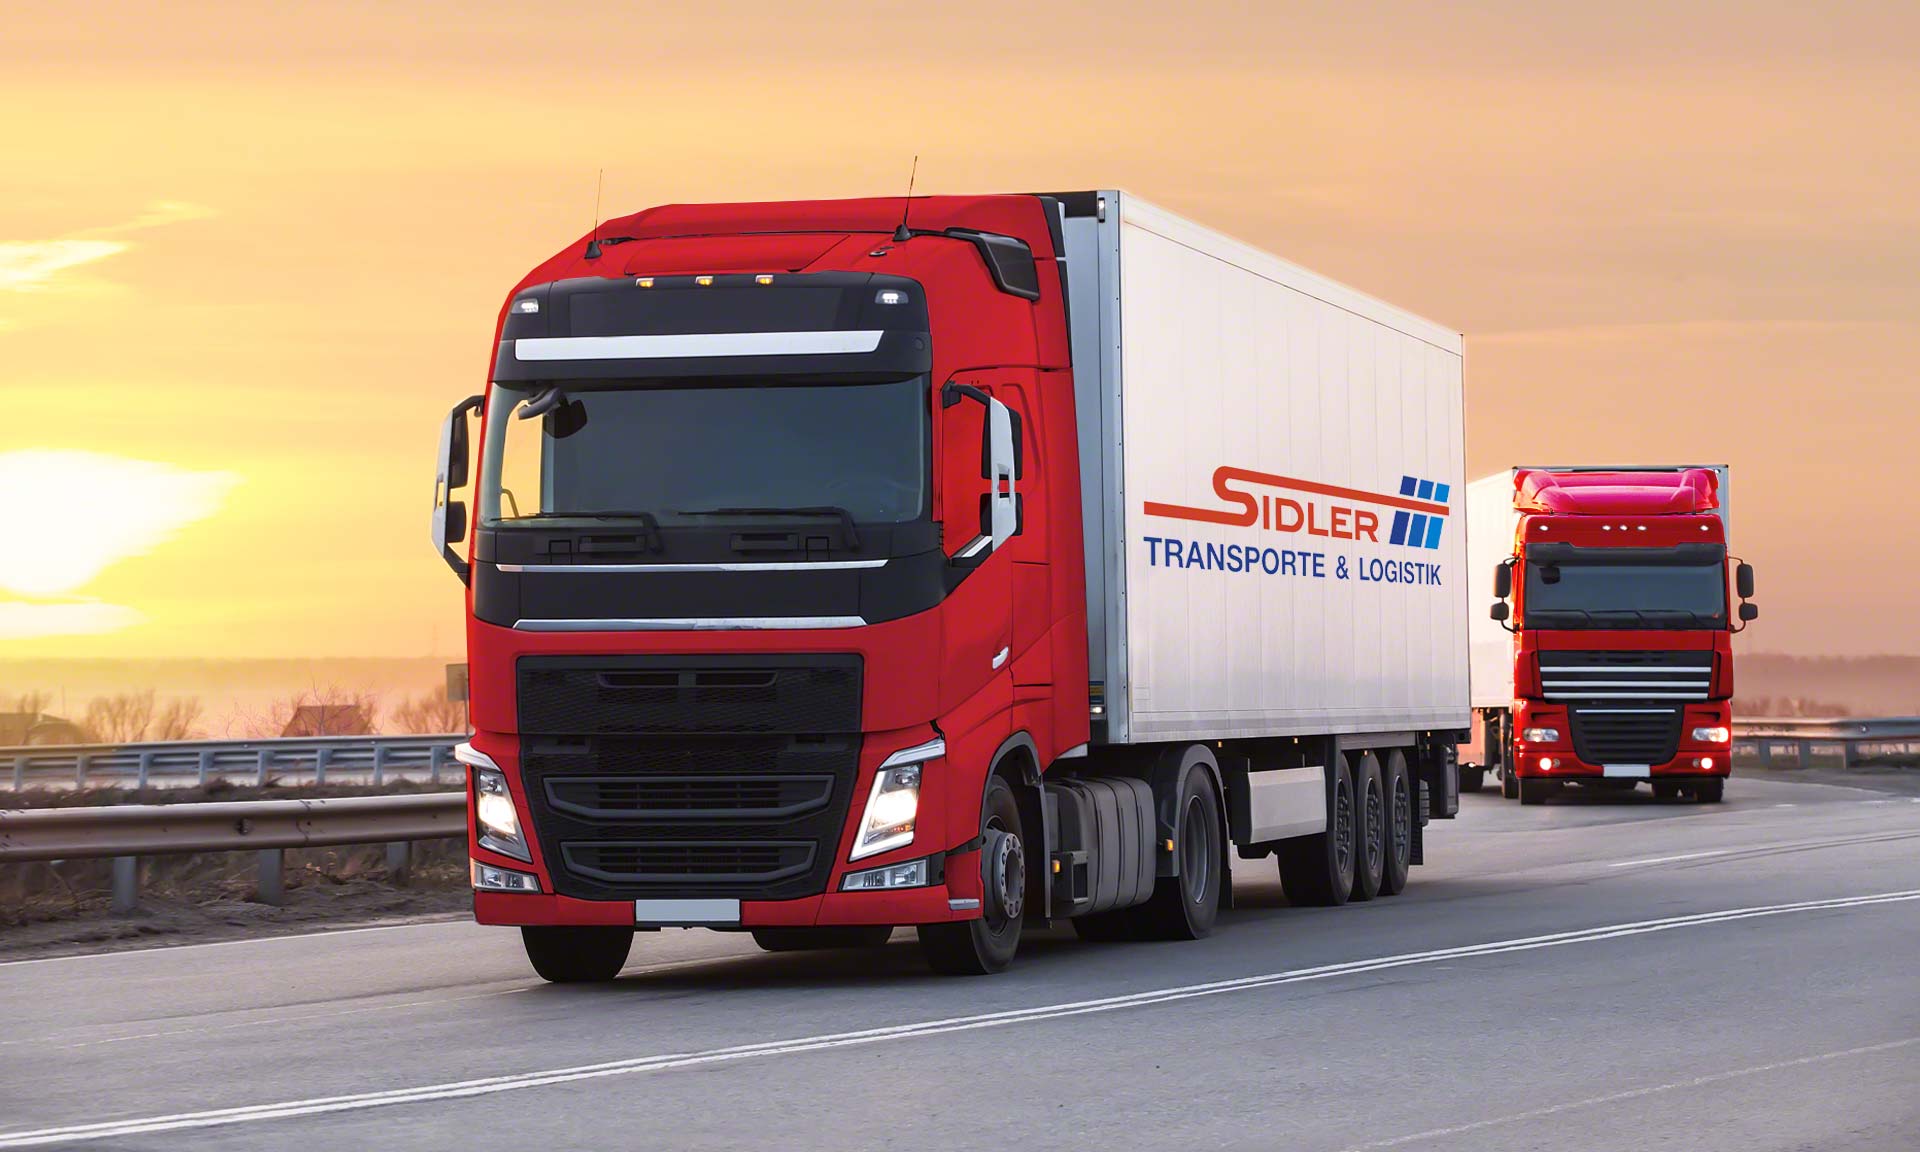 Mecalux digitalizará tres depósitos de Sidler Transporte & Logistik en Suiza